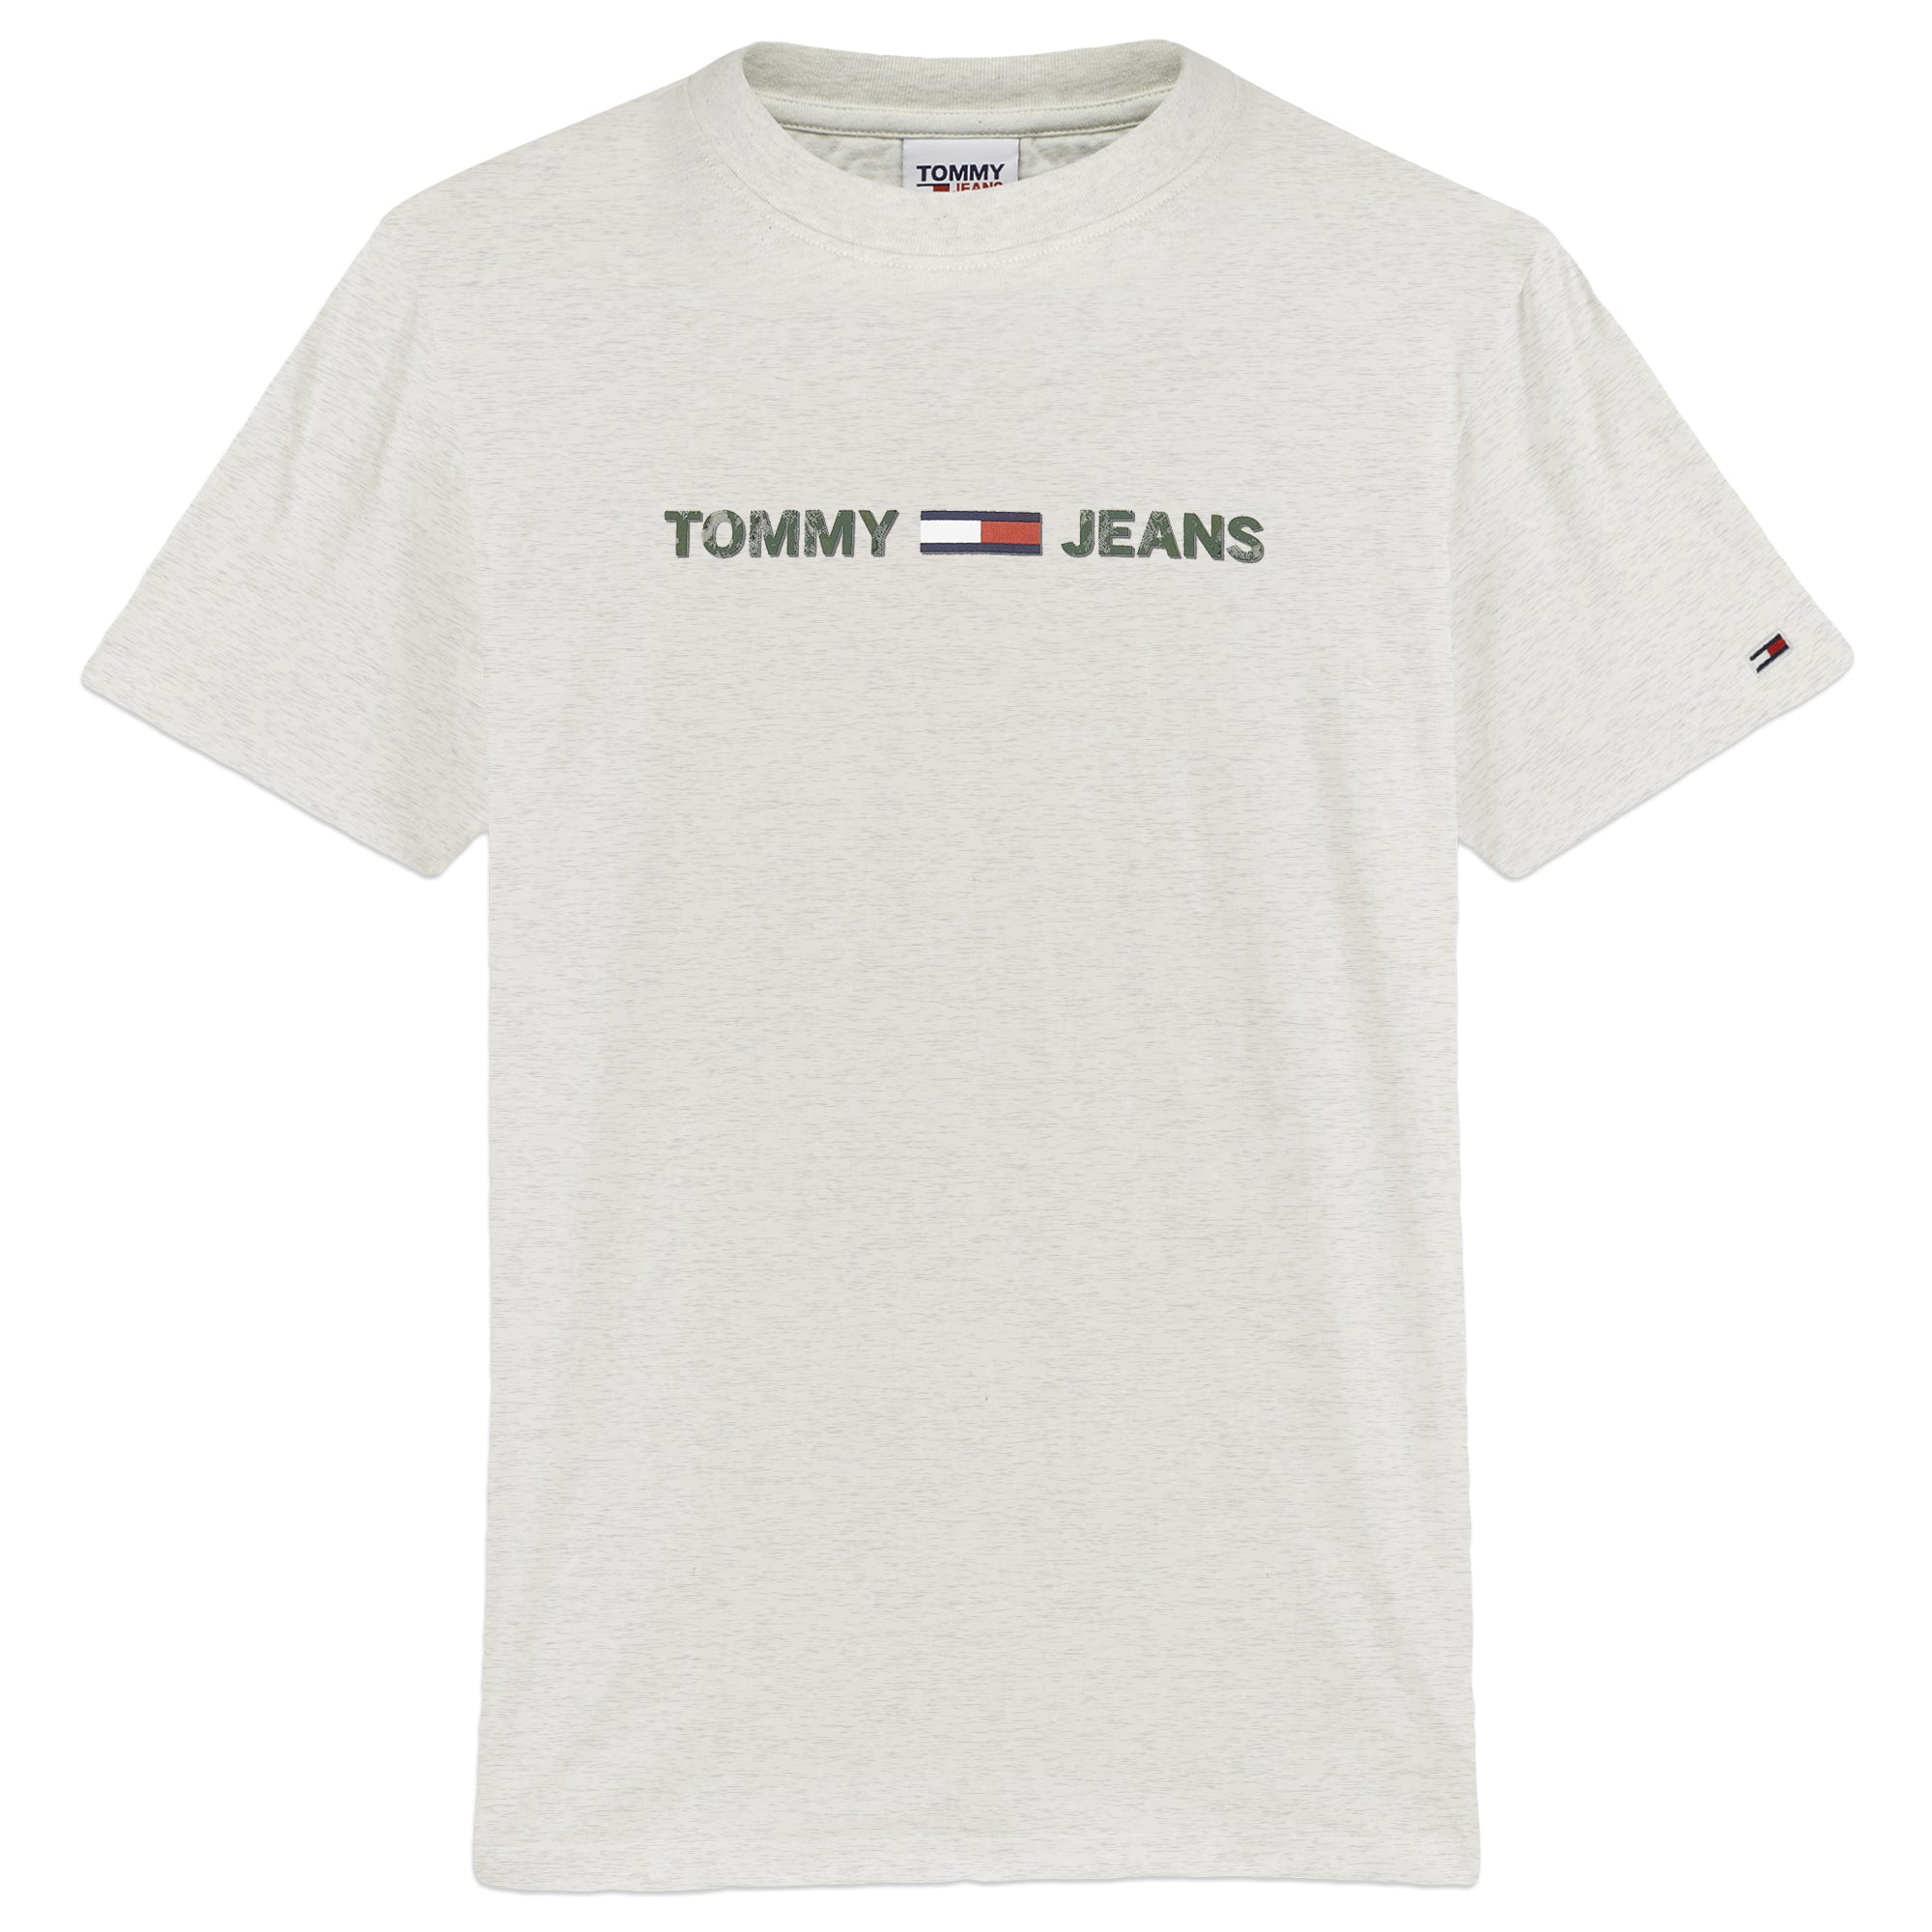 Tommy Jeans Seasonal Linear T-Shirt - White Heather